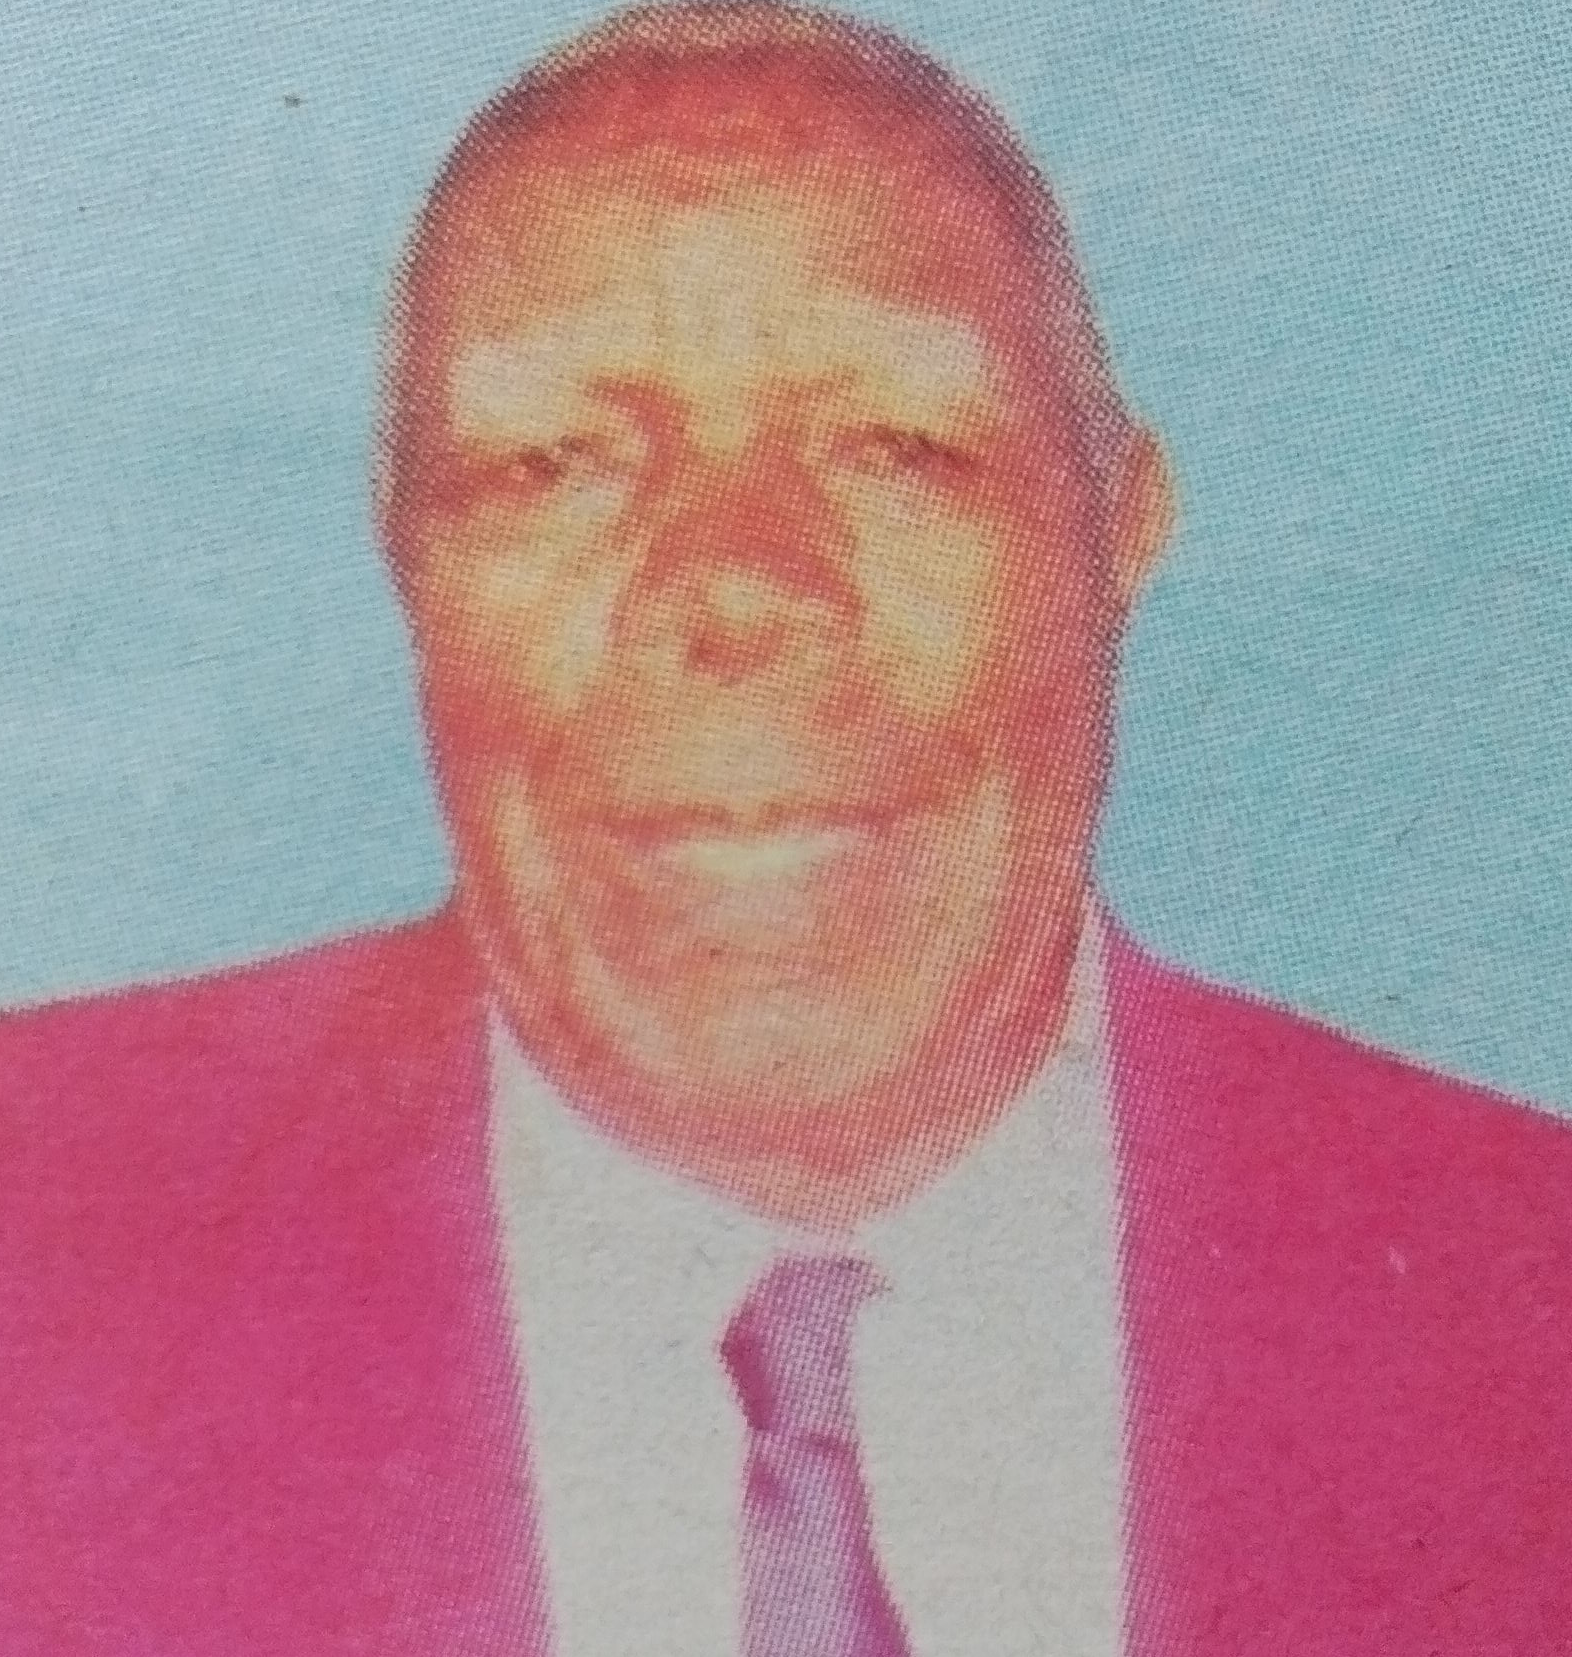 Obituary Image of Eliud Macharia Wamae